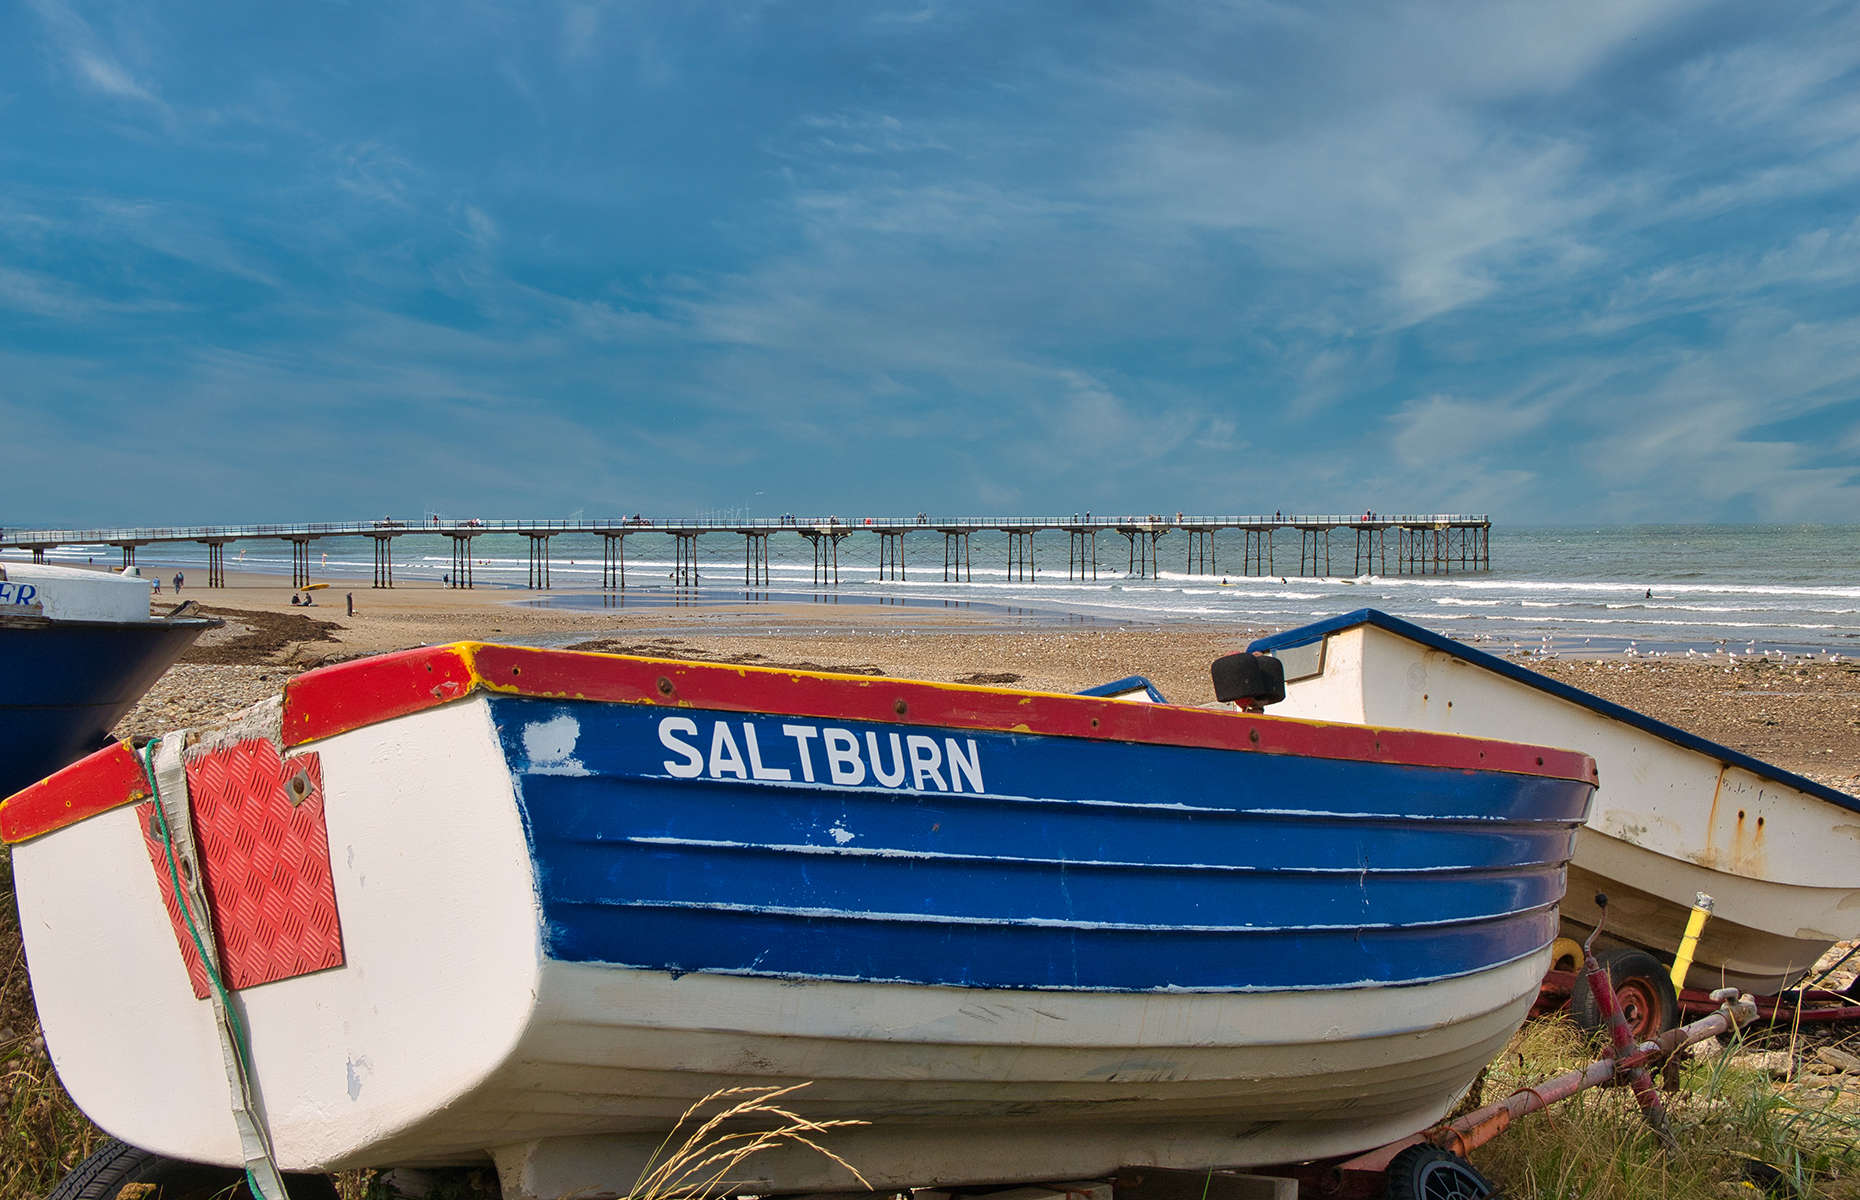 Saltburn beach, Saltburn-by-the-Sea, England. (Image: AlanMorris/Shutterstock)